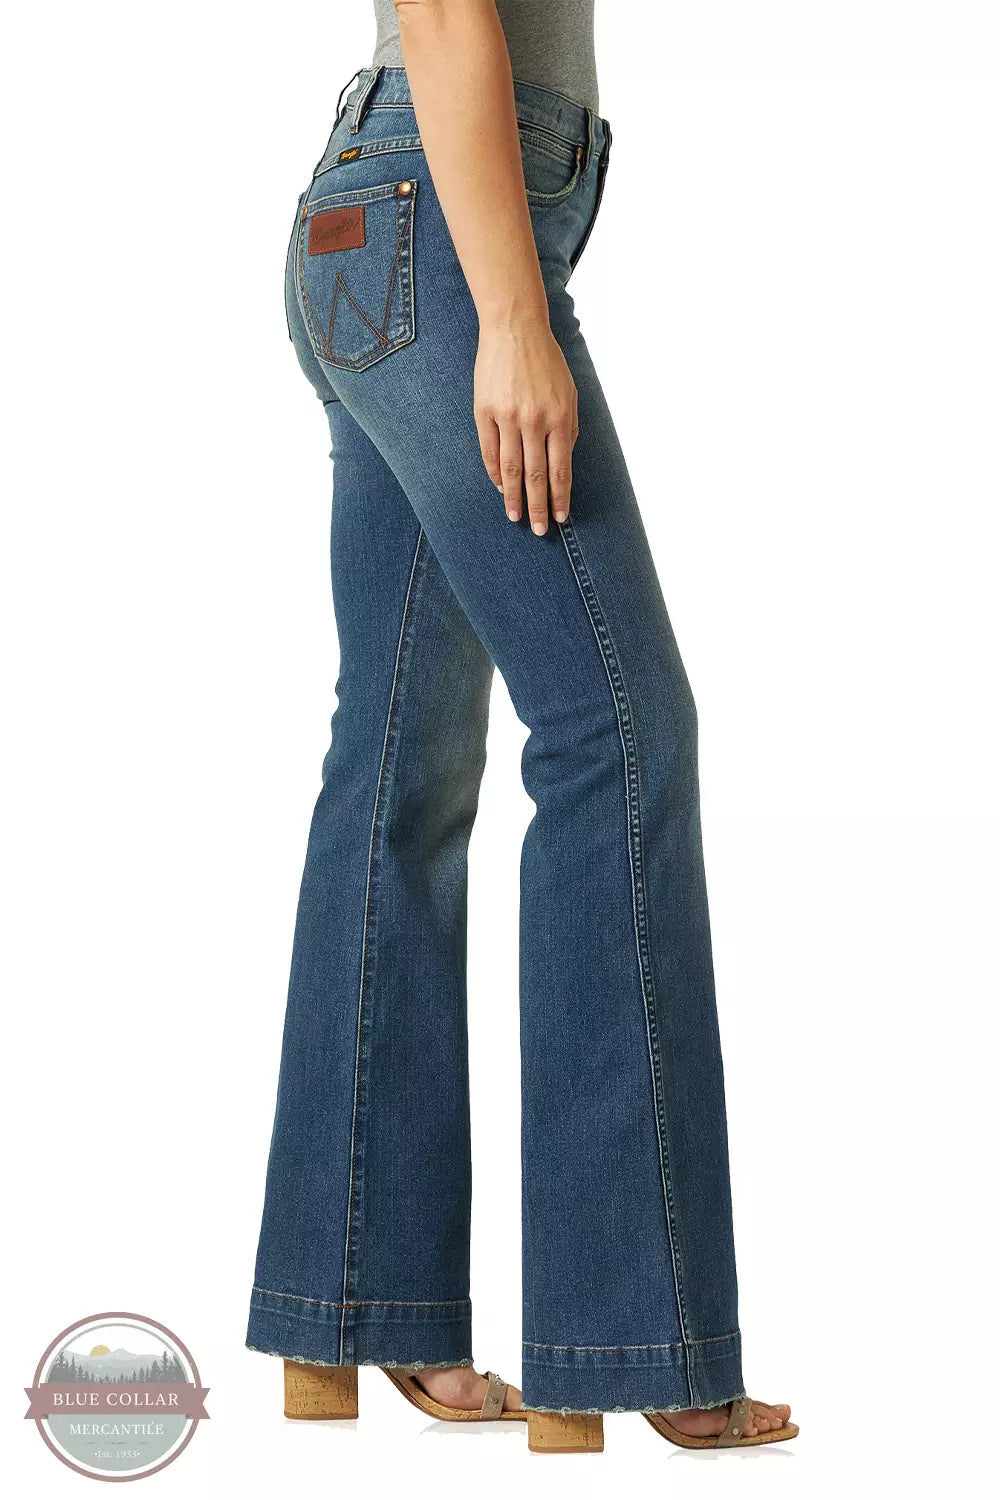 Wrangler 1011MPESY Retro Premium High Rise Slim Trouser Jeans in Shelby Side View